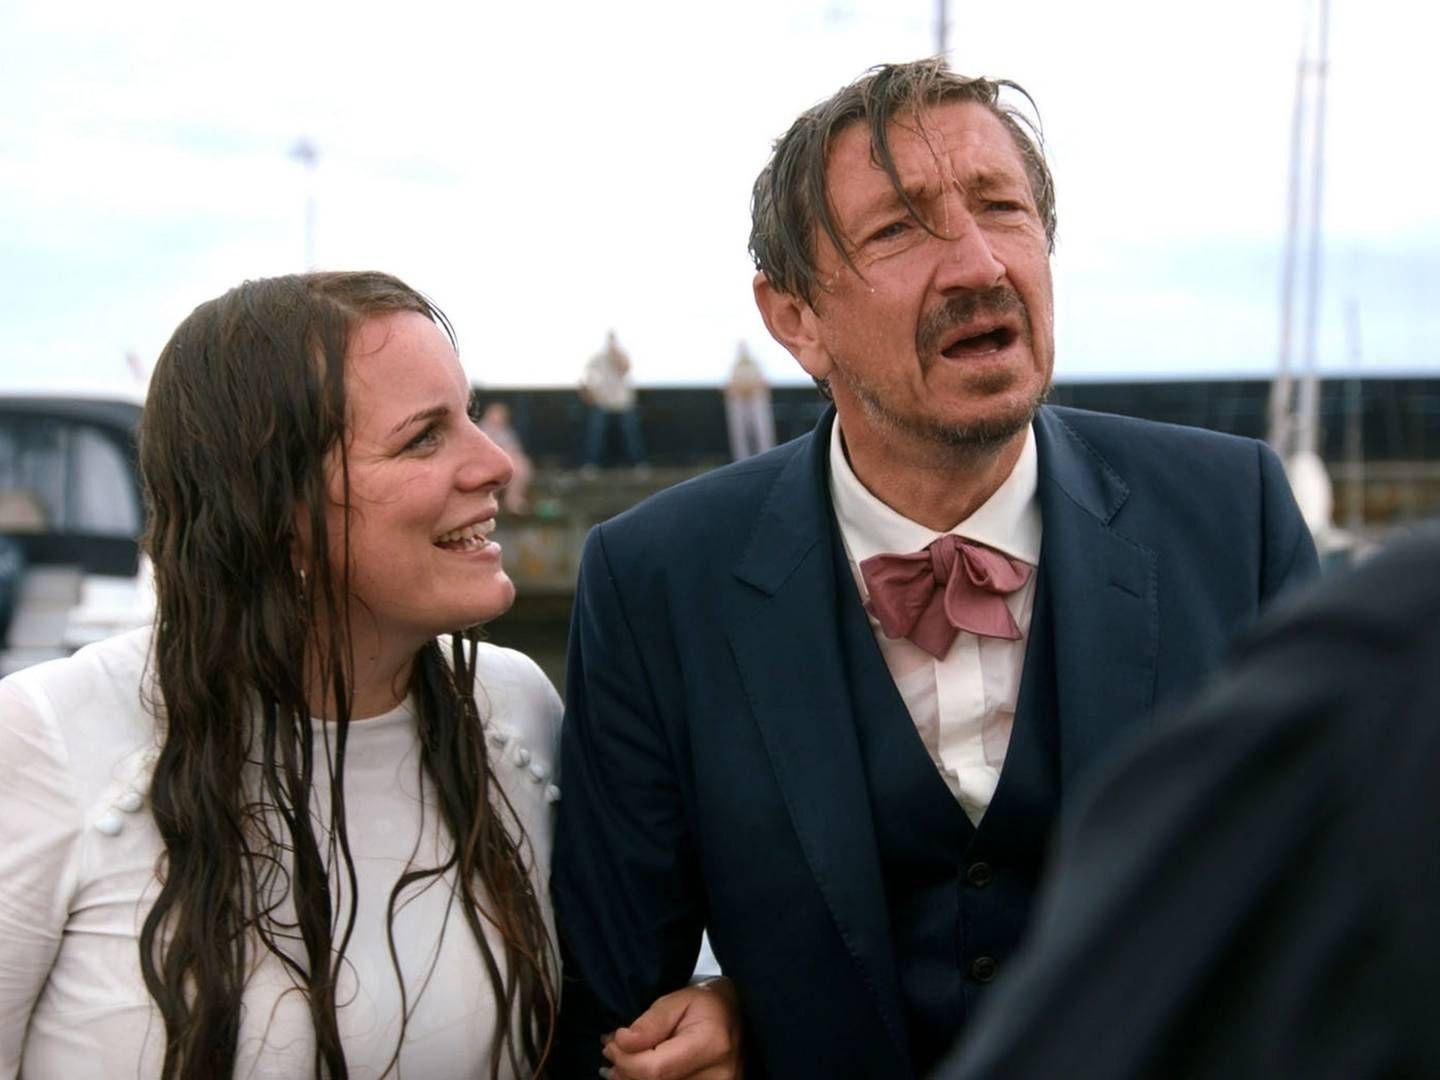 Skuespillerne Lise Baastrup og Nicolaj Kopernikus i DR's tv-serie "Hvor ligger Løkken". | Foto: Tobias Scavenius, DR.